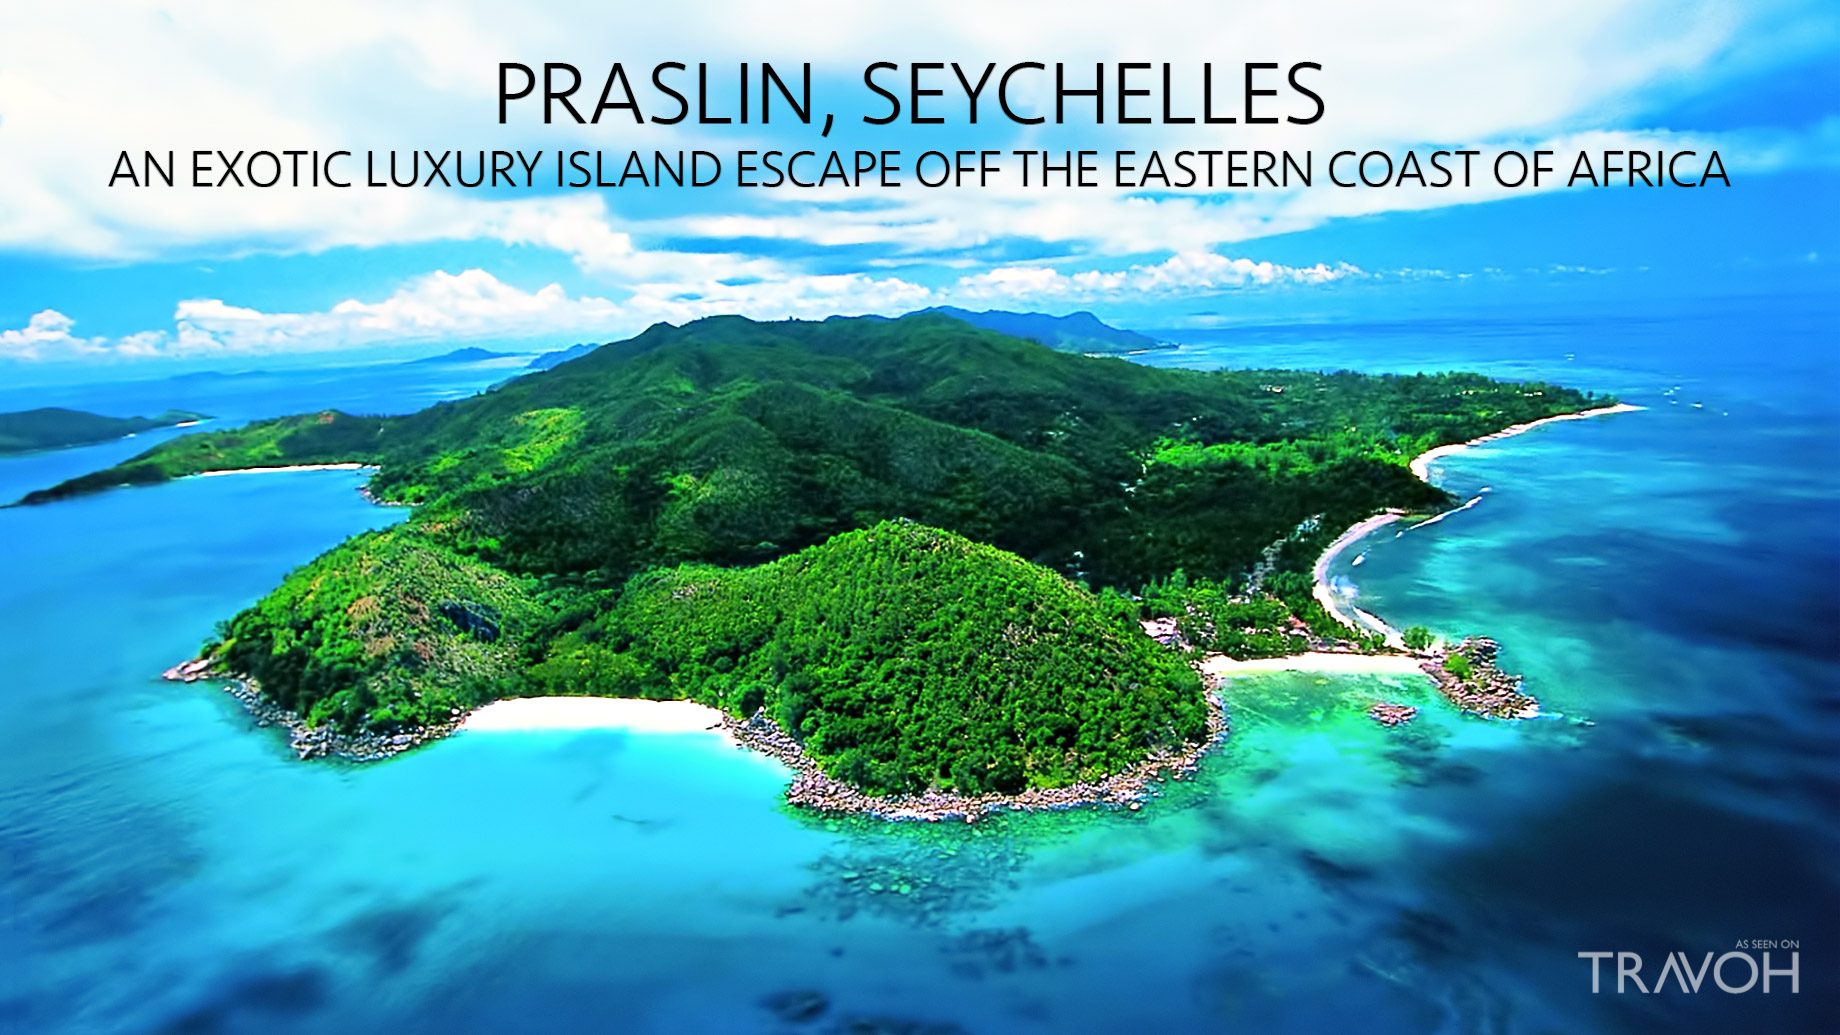 Praslin, Seychelles – An Exotic Luxury Island Escape off the Eastern Coast of Africa